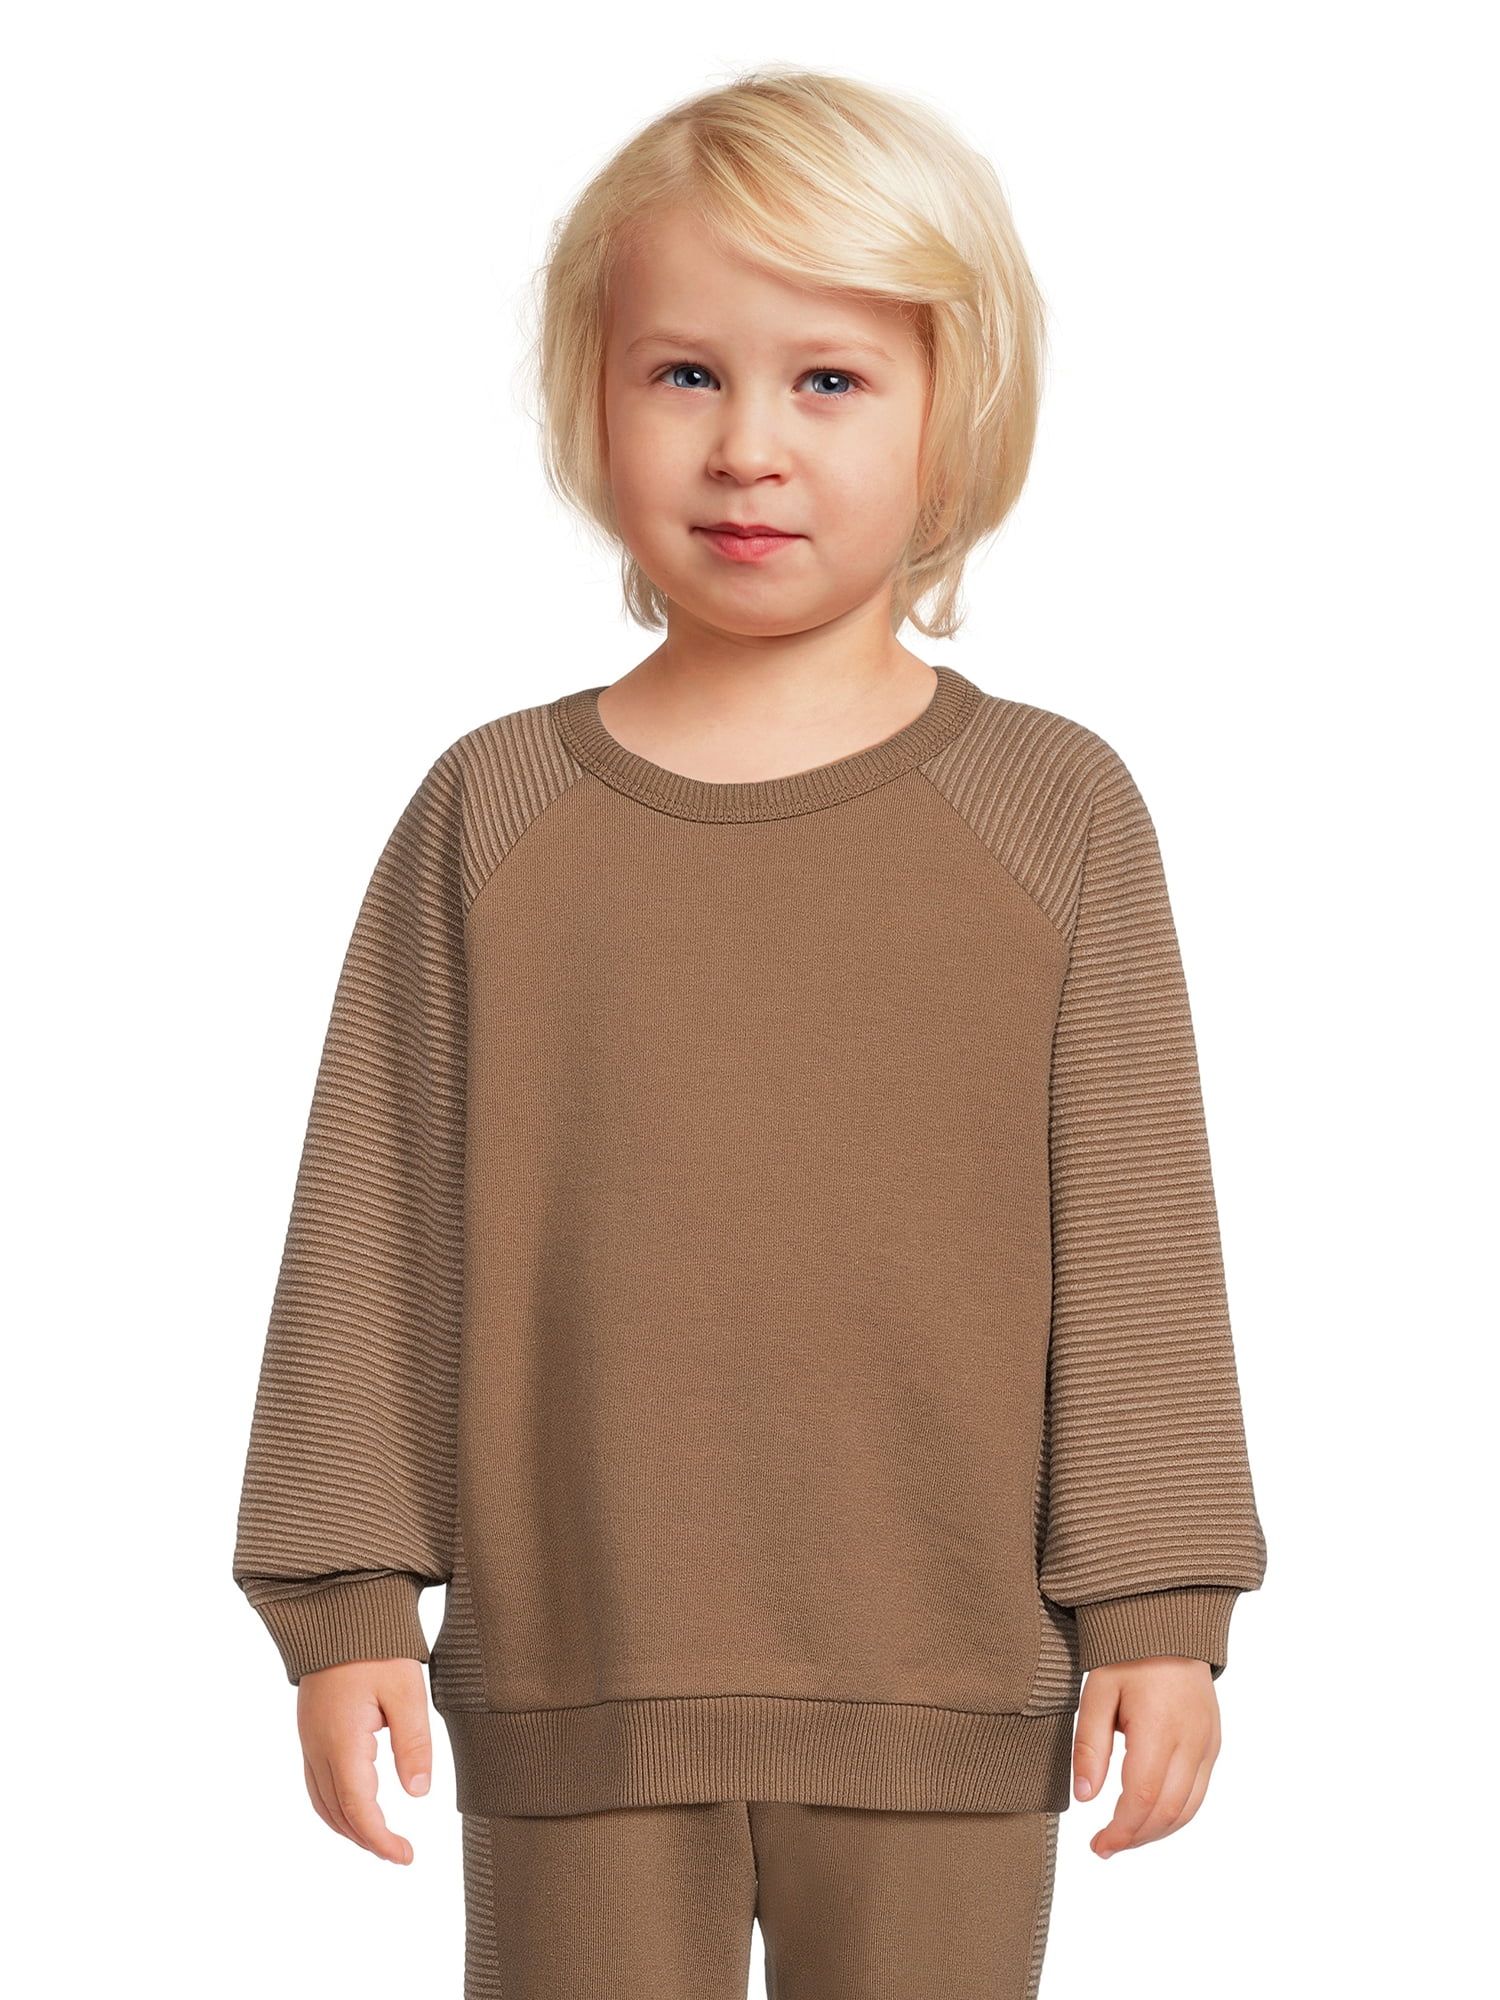 easy-peasy Toddler Boy Long Sleeve Crewneck Sweatshirt, Sizes 12 Months-5T | Walmart (US)